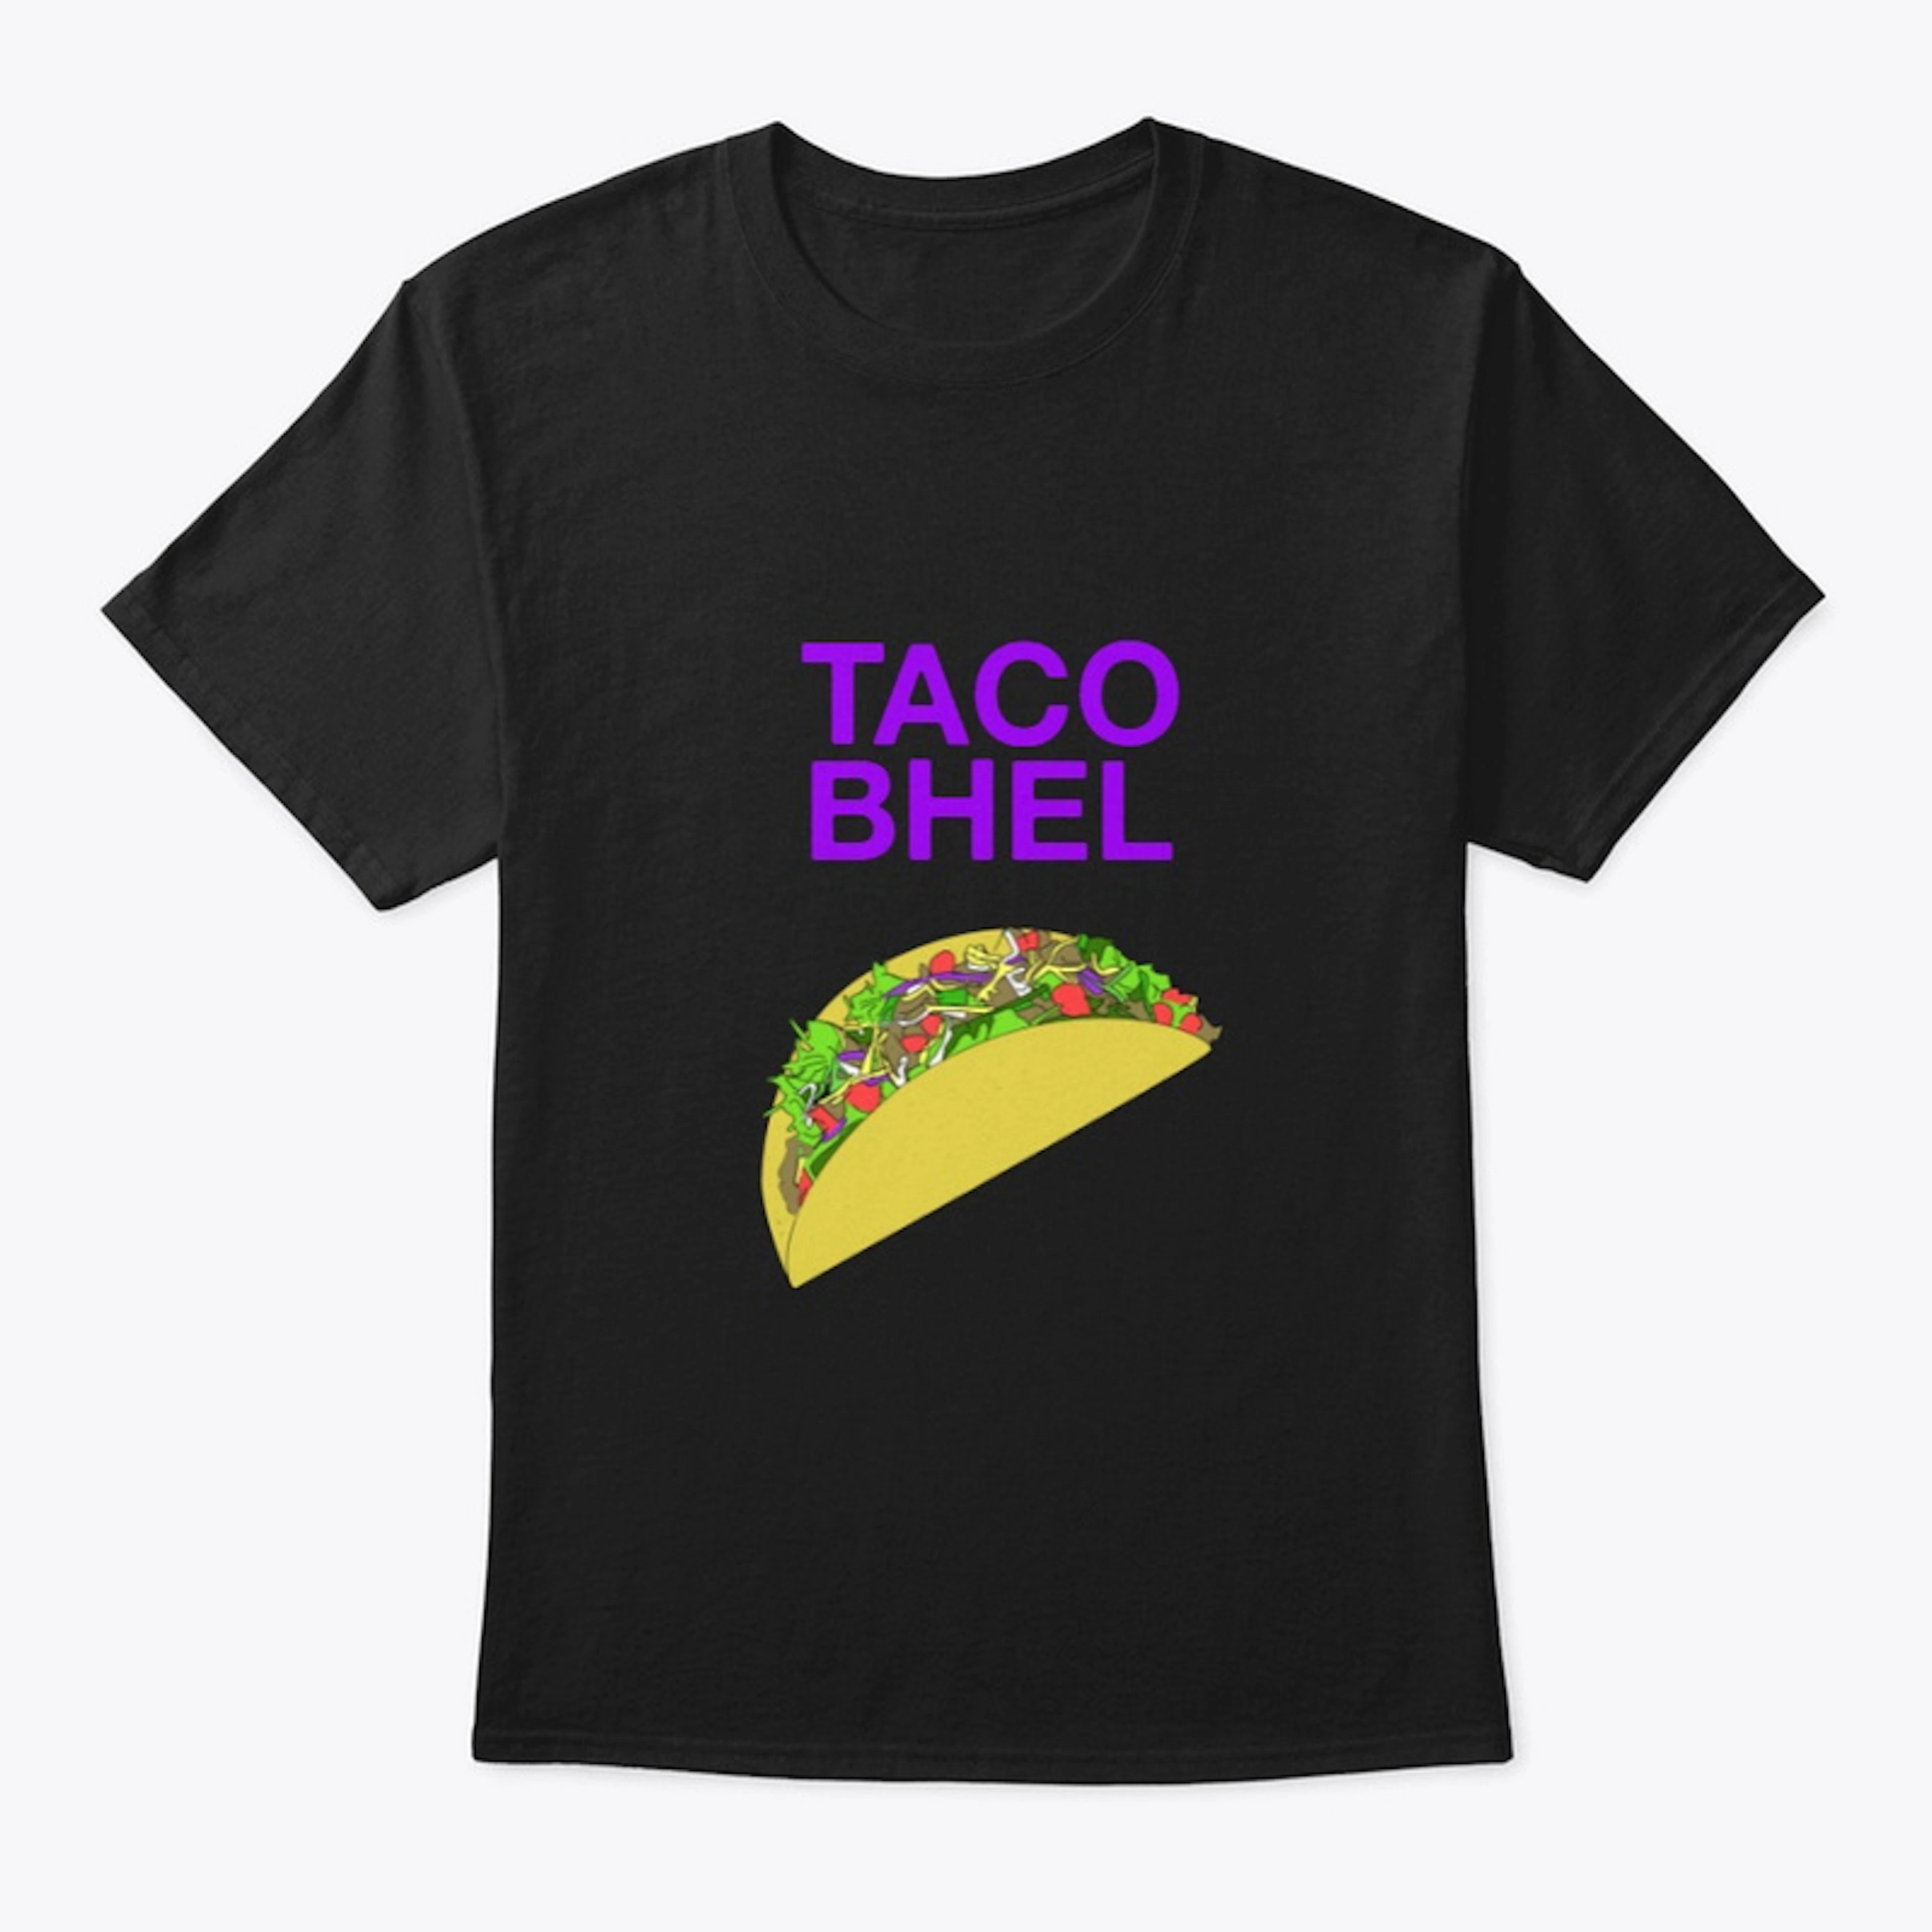 Taco Bhel